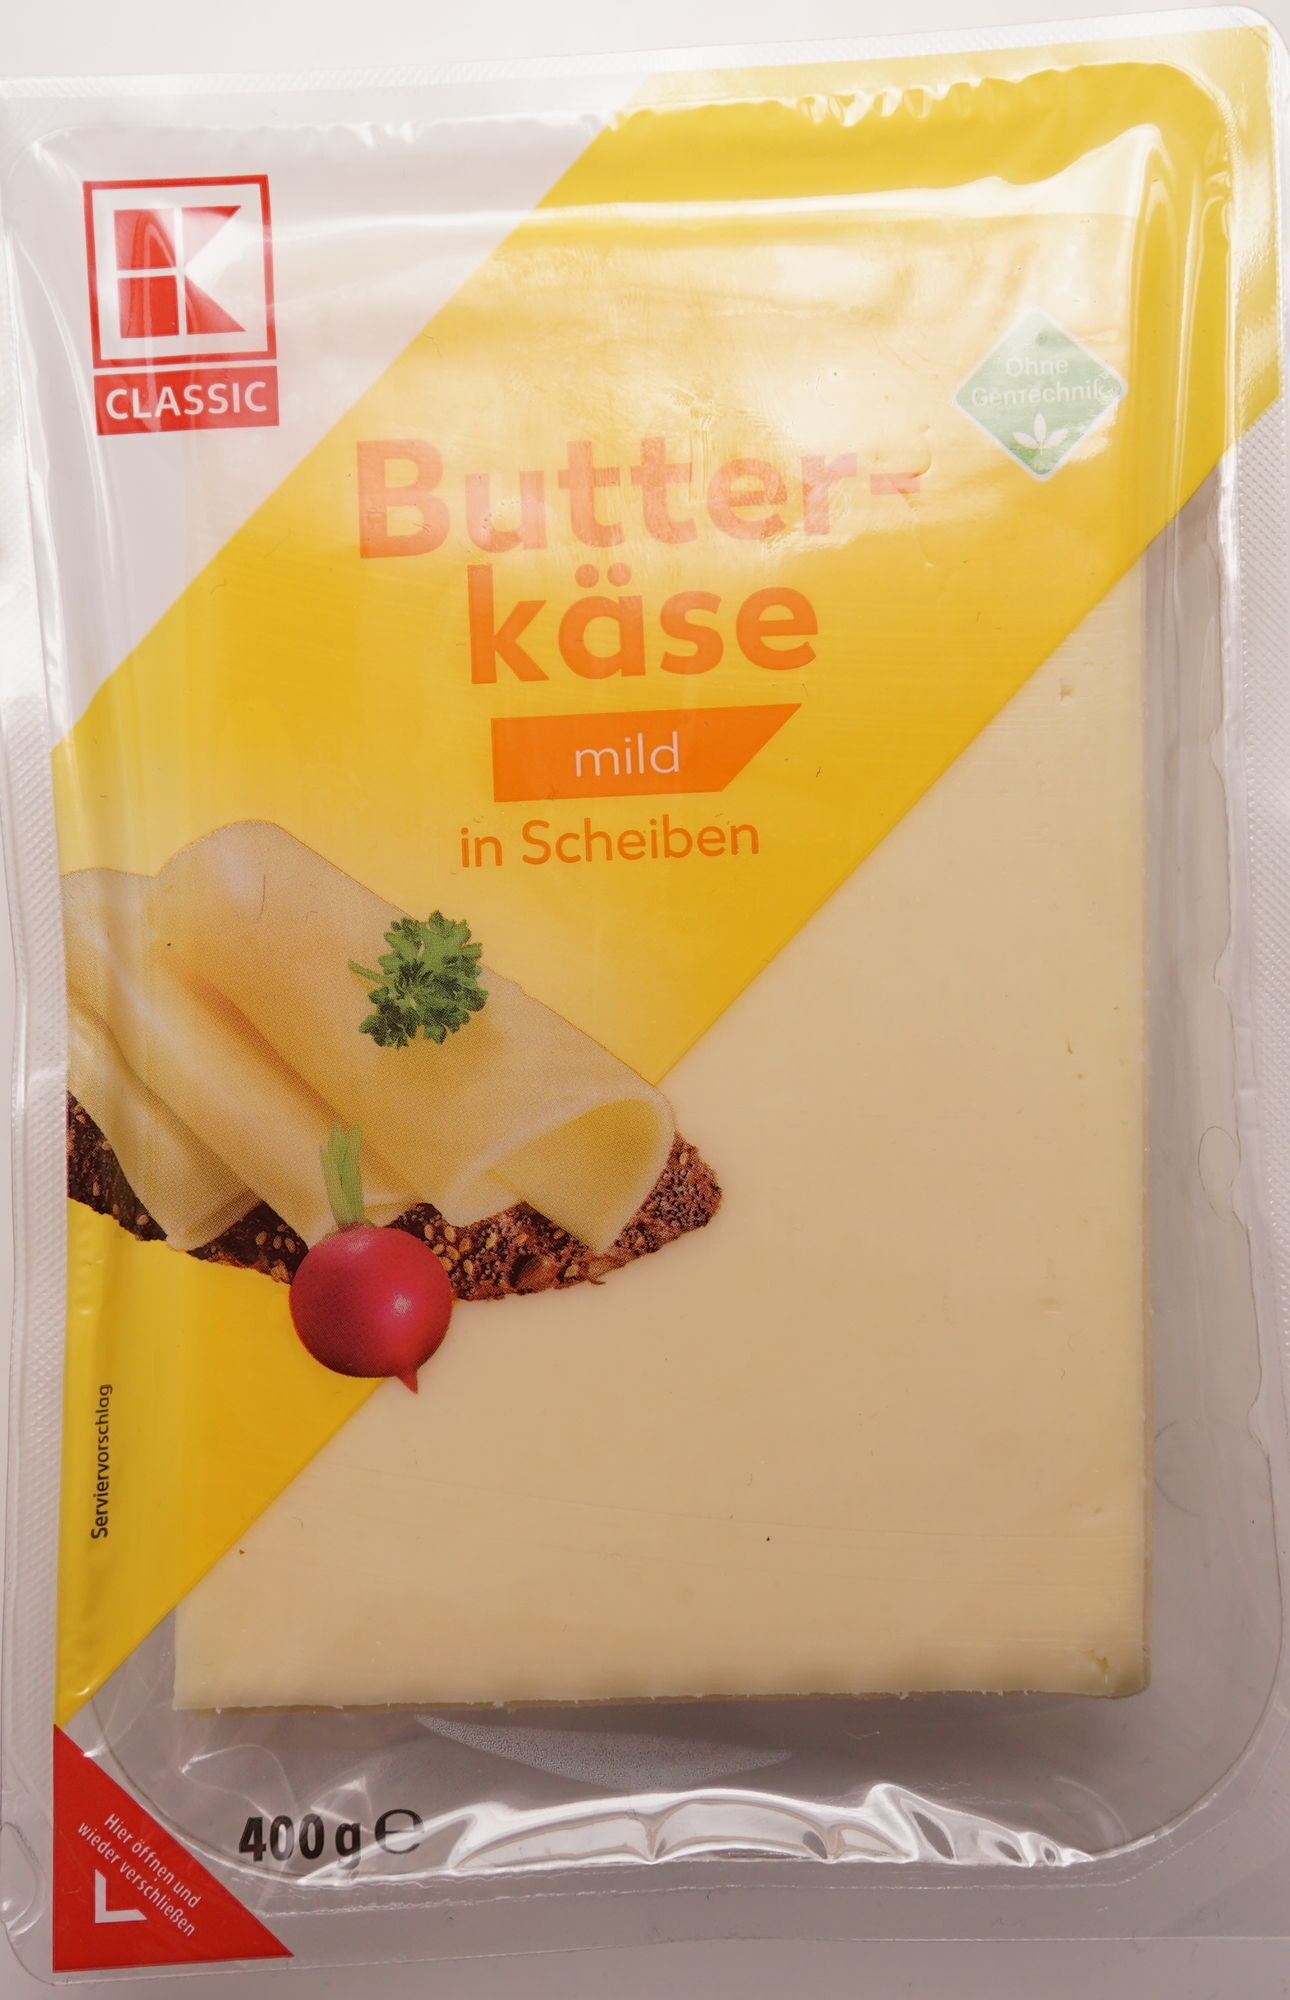 Butterkäse mild in Scheiben - Product - de